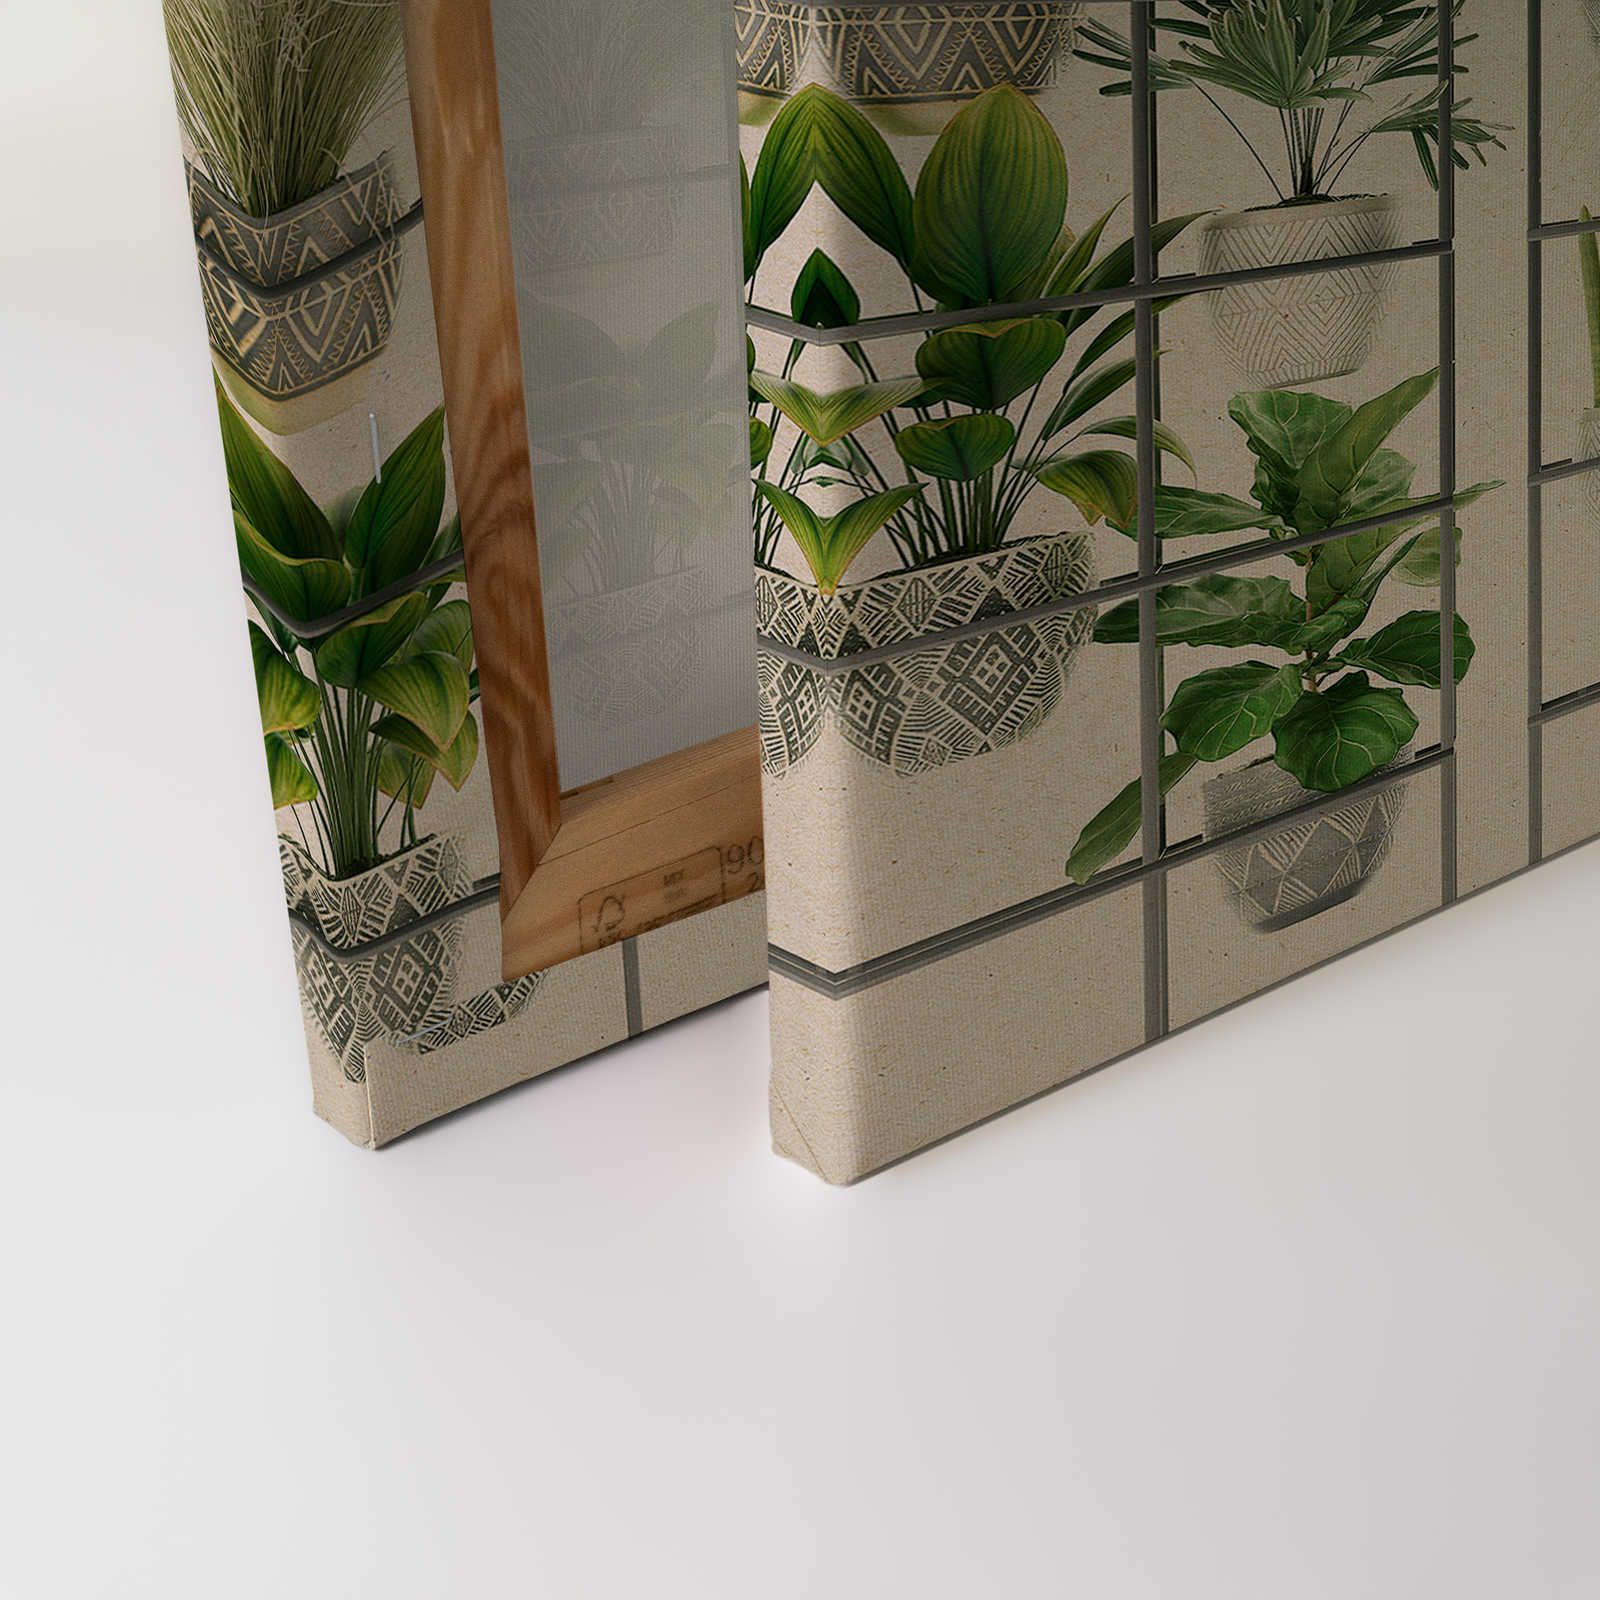             Plantenwinkel 2 - Canvas schilderij moderne plantenwand in groen & grijs - 0,90 m x 0,60 m
        